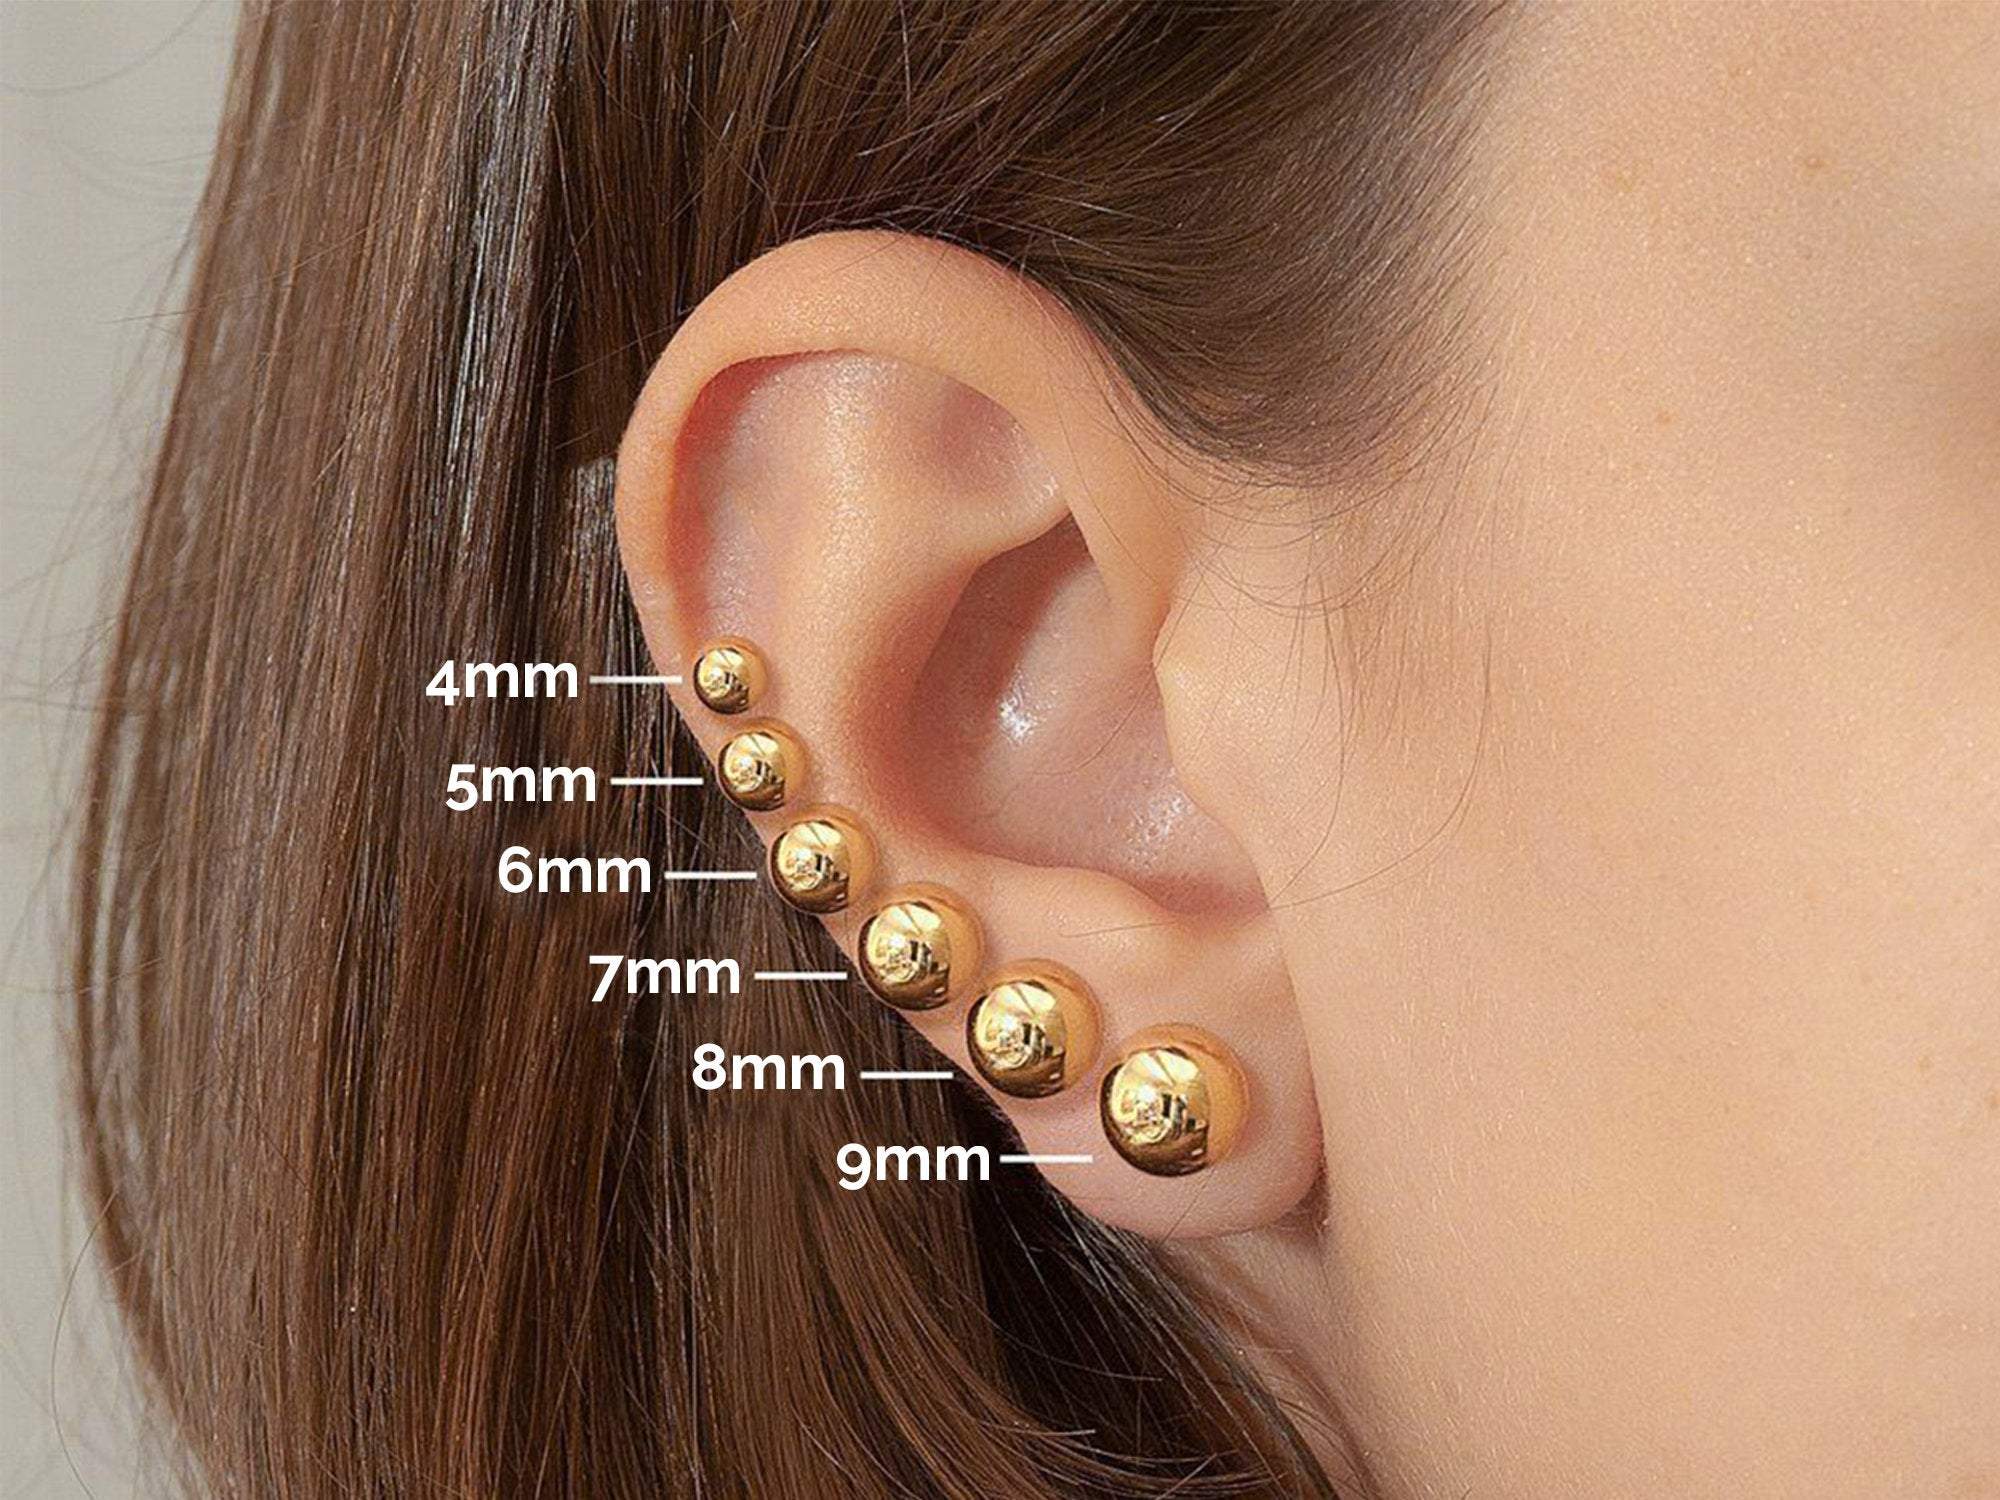 Aggregate 80+ 8mm gold ball stud earrings